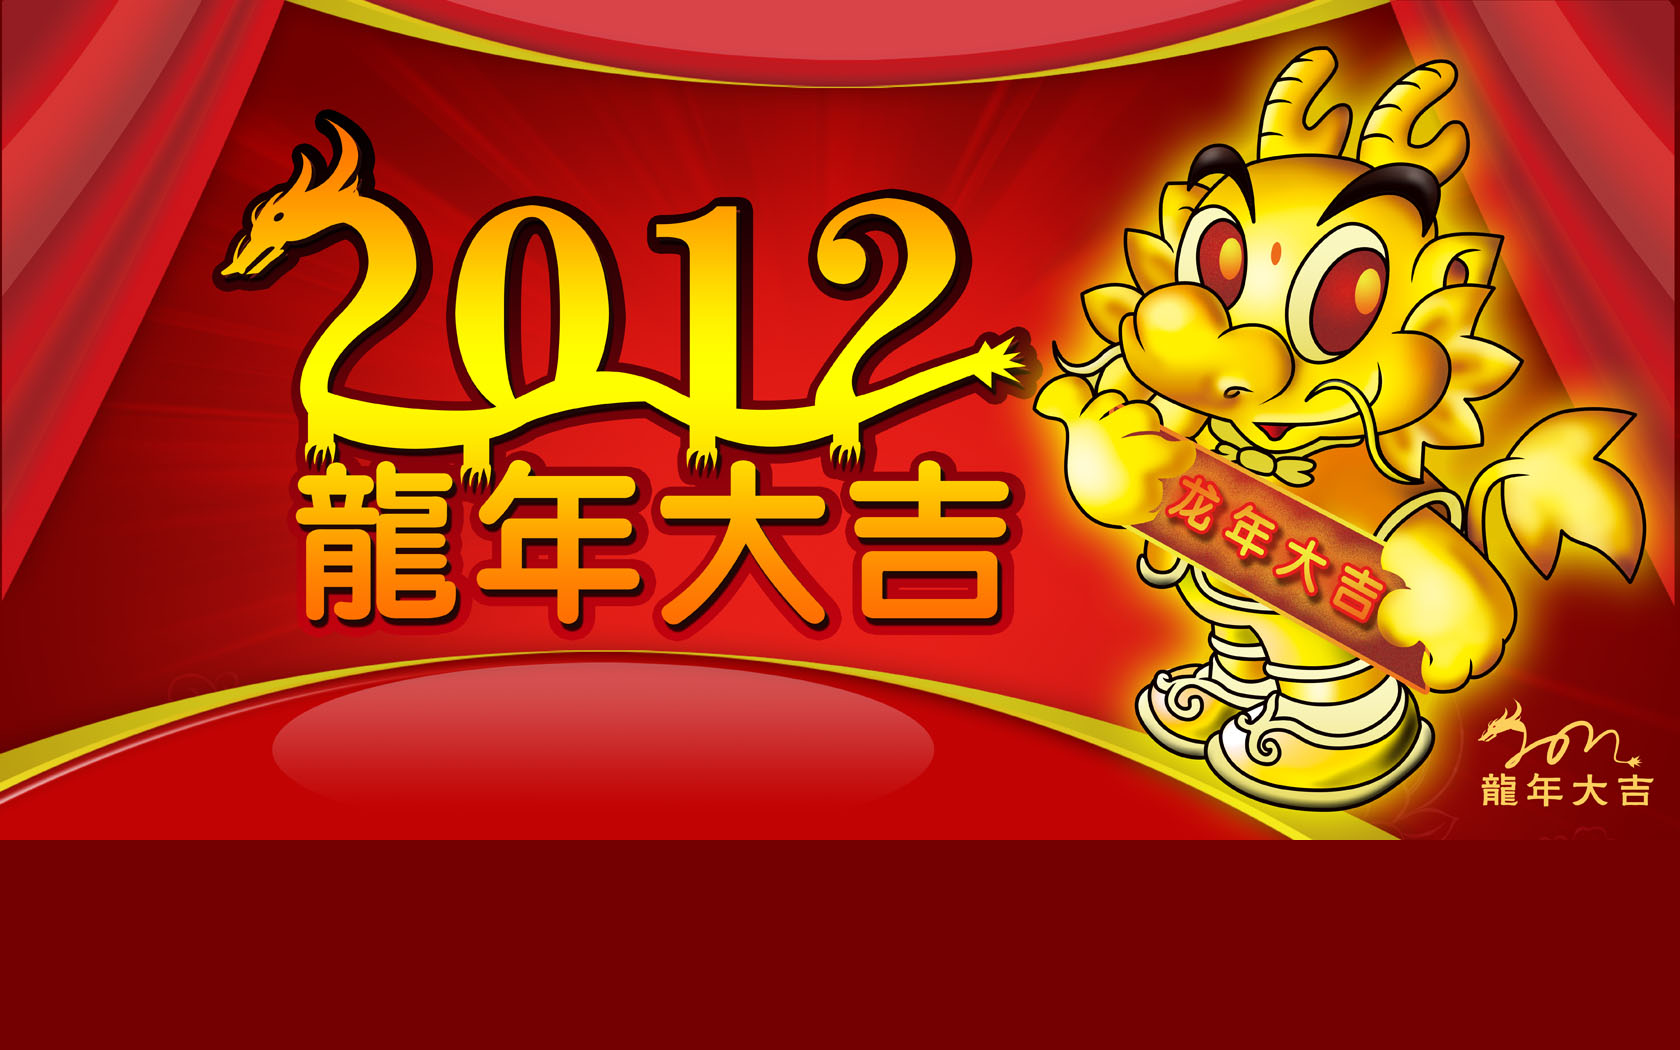 Dragon year auspicious and festive desktop background picture